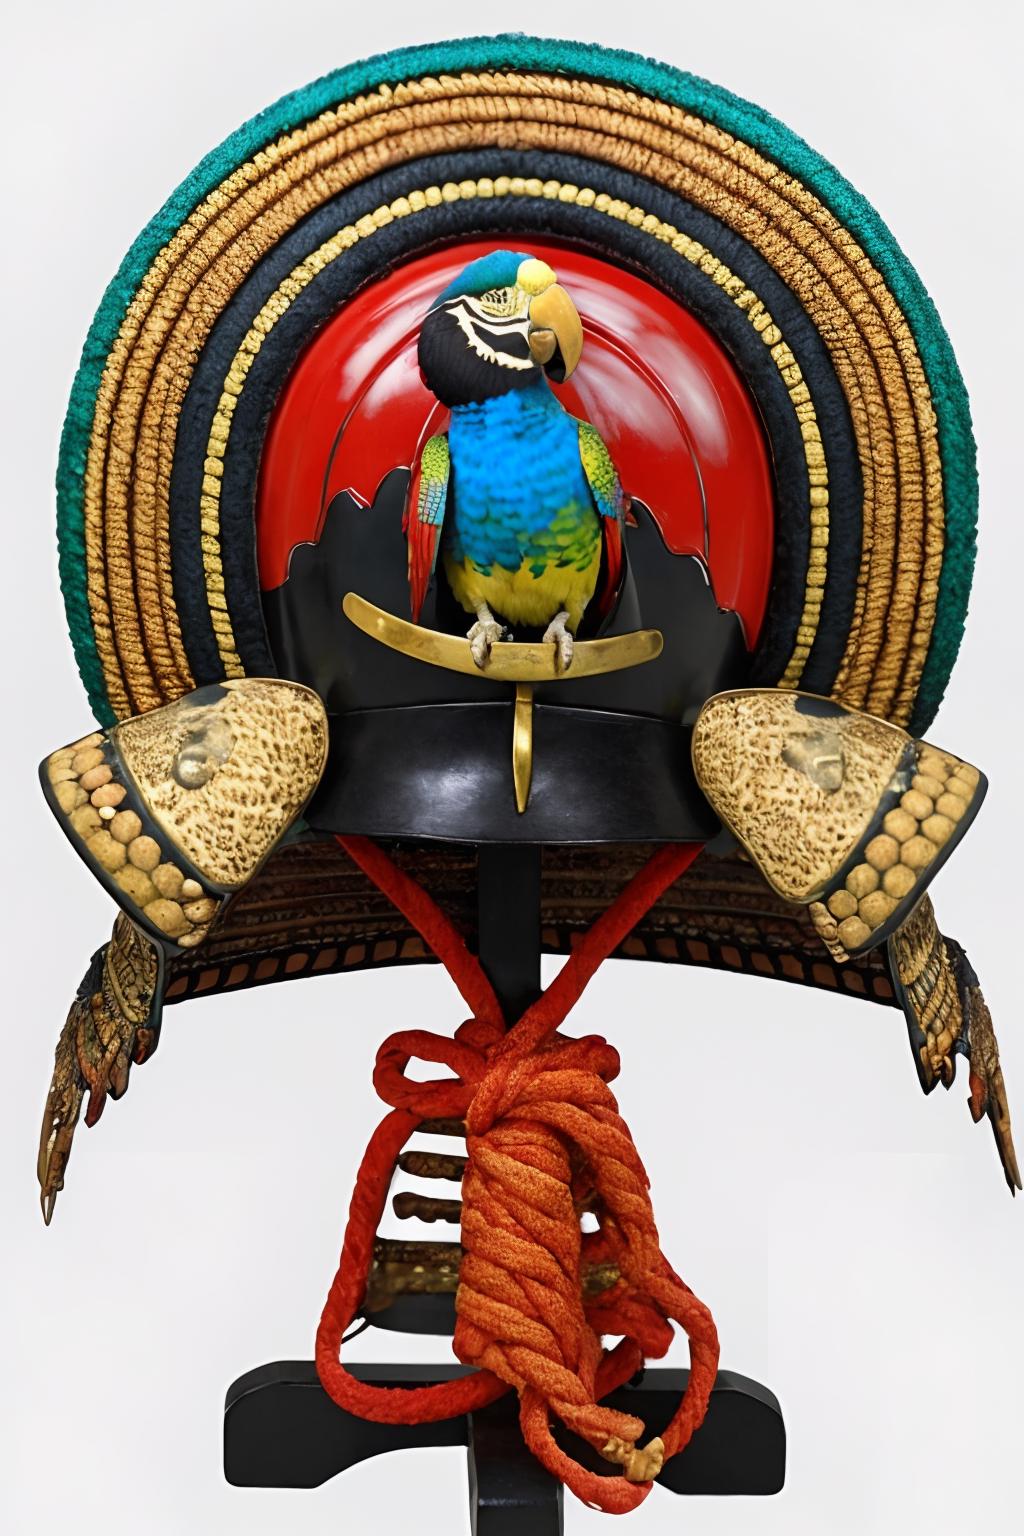 兜 kabuto 武士头盔 samurai helmet image by Kikkawa